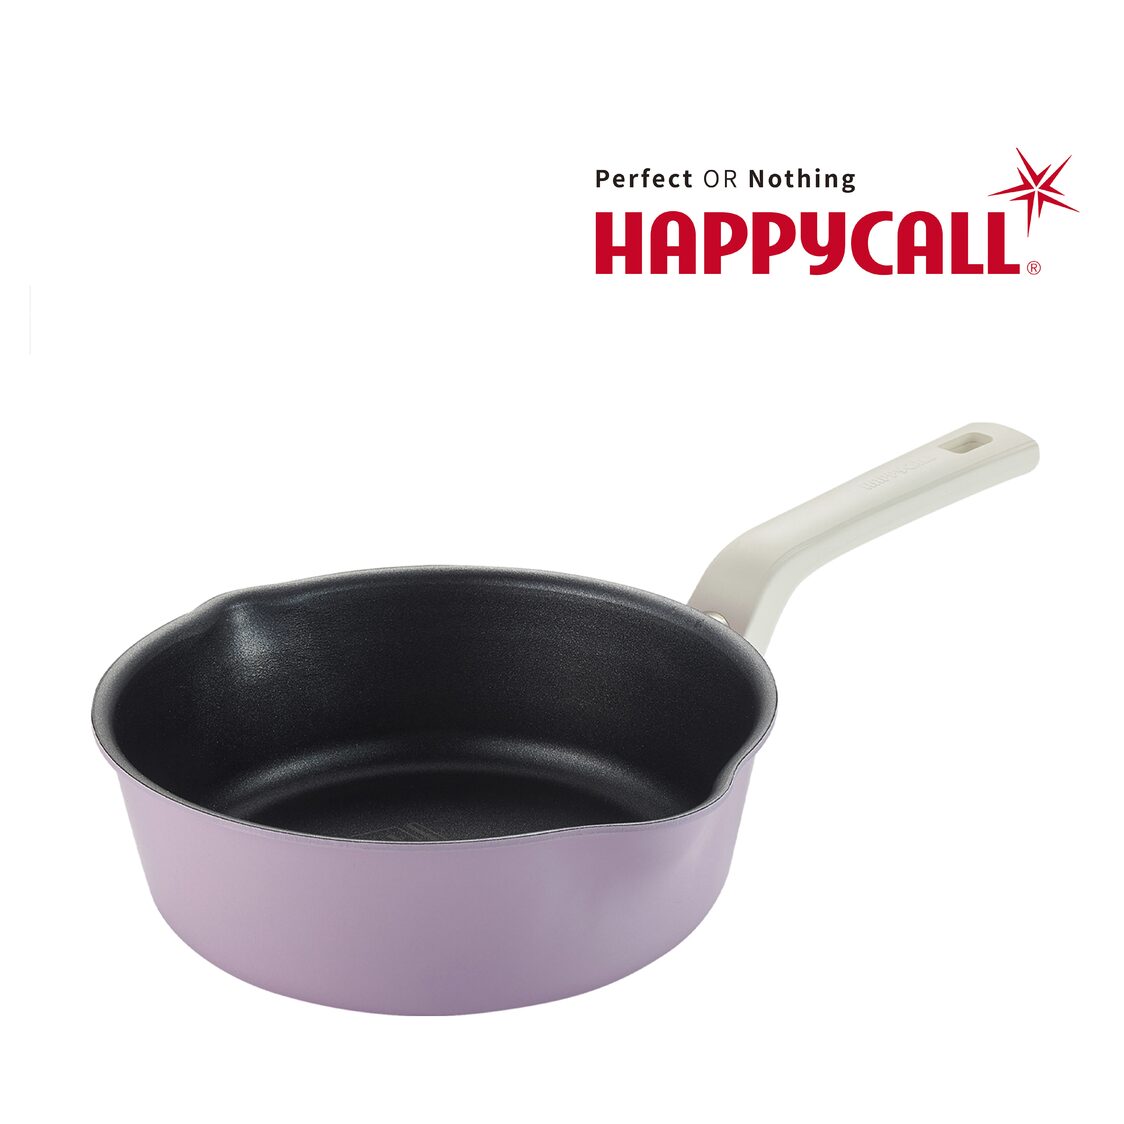 Happycall 20cm IH Non-Stick Flex Pan - Lollipop Lavender 3001-0519